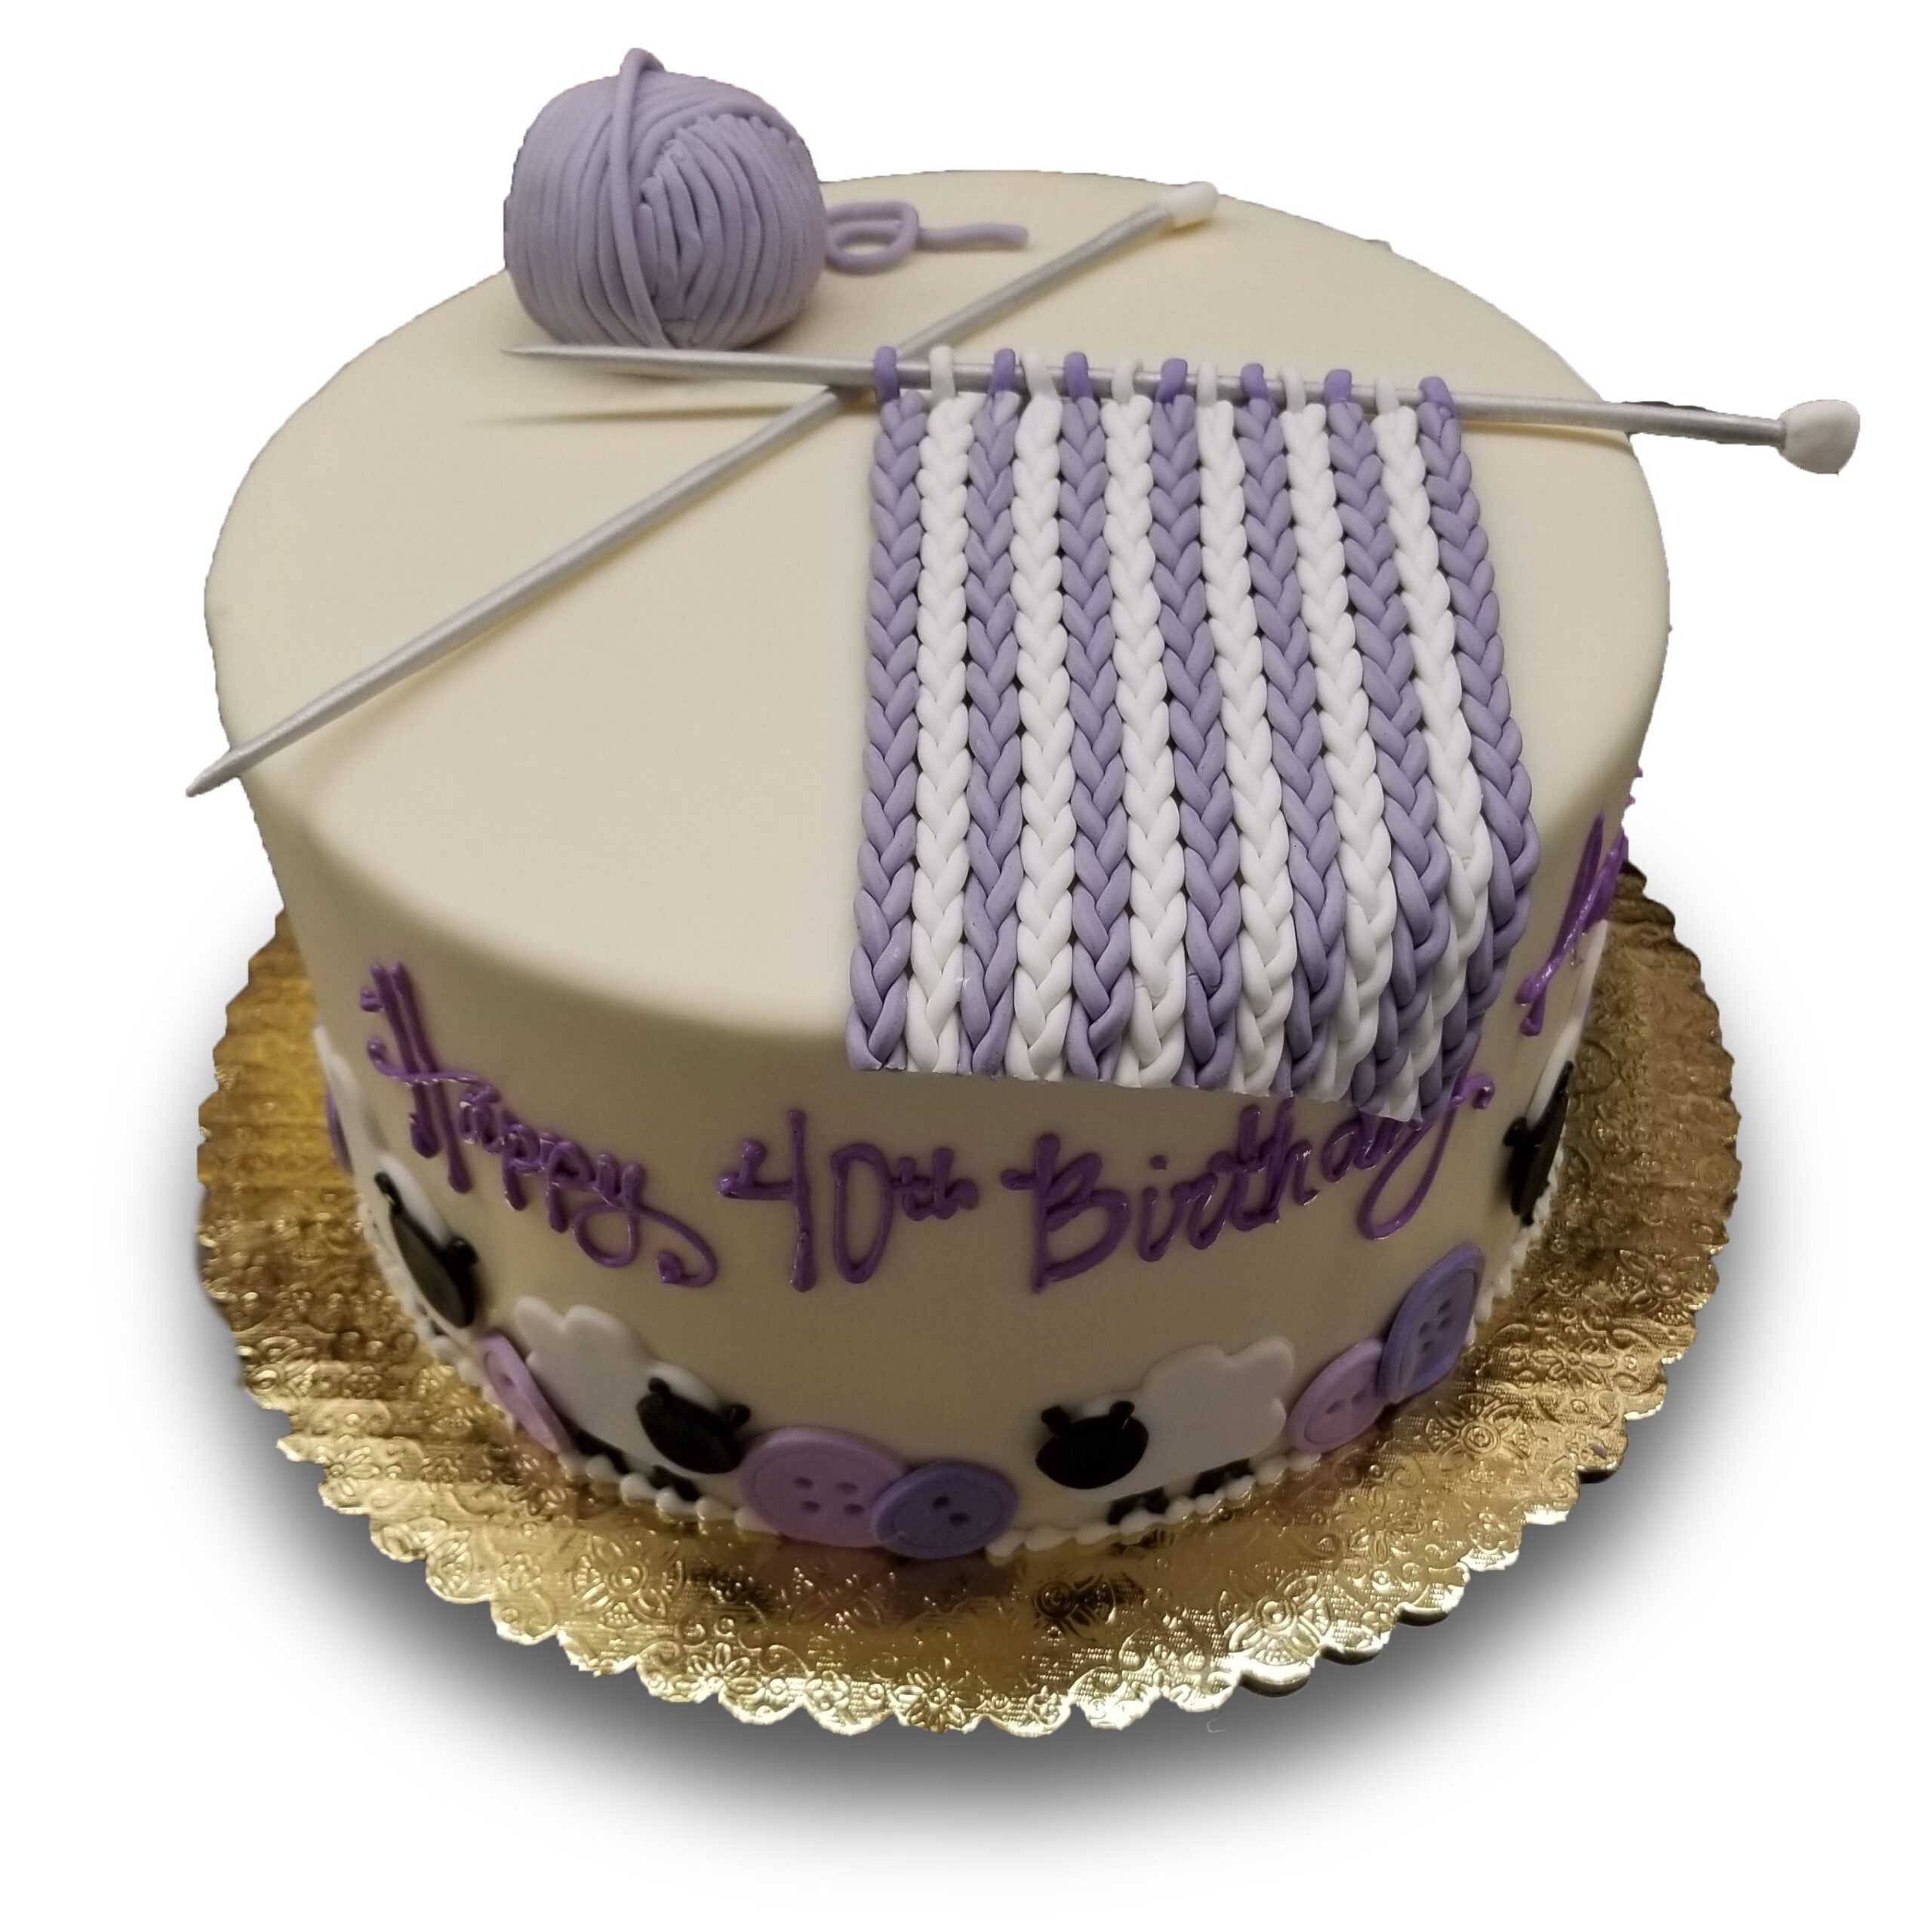 AB032. Fondant covered cake with fondant needles, knitting and sheep